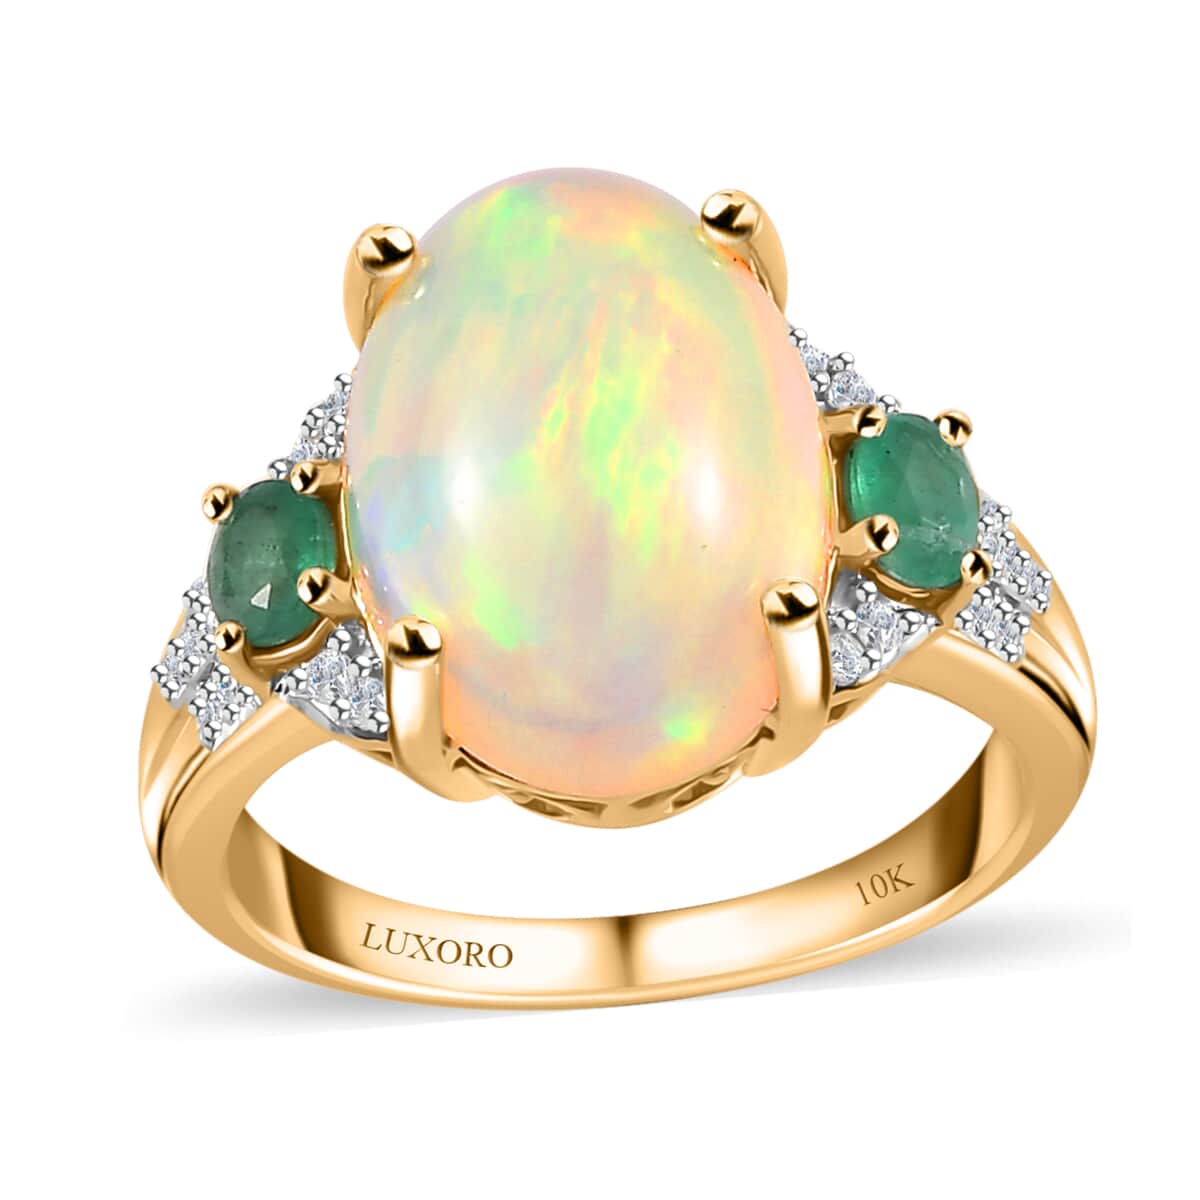 Luxoro 10K Yellow Gold Premium Ethiopian Welo Opal, Kagem Zambian Emerald and G-H I2 Diamond Ring (Size 10.0) 5.00 ctw image number 0